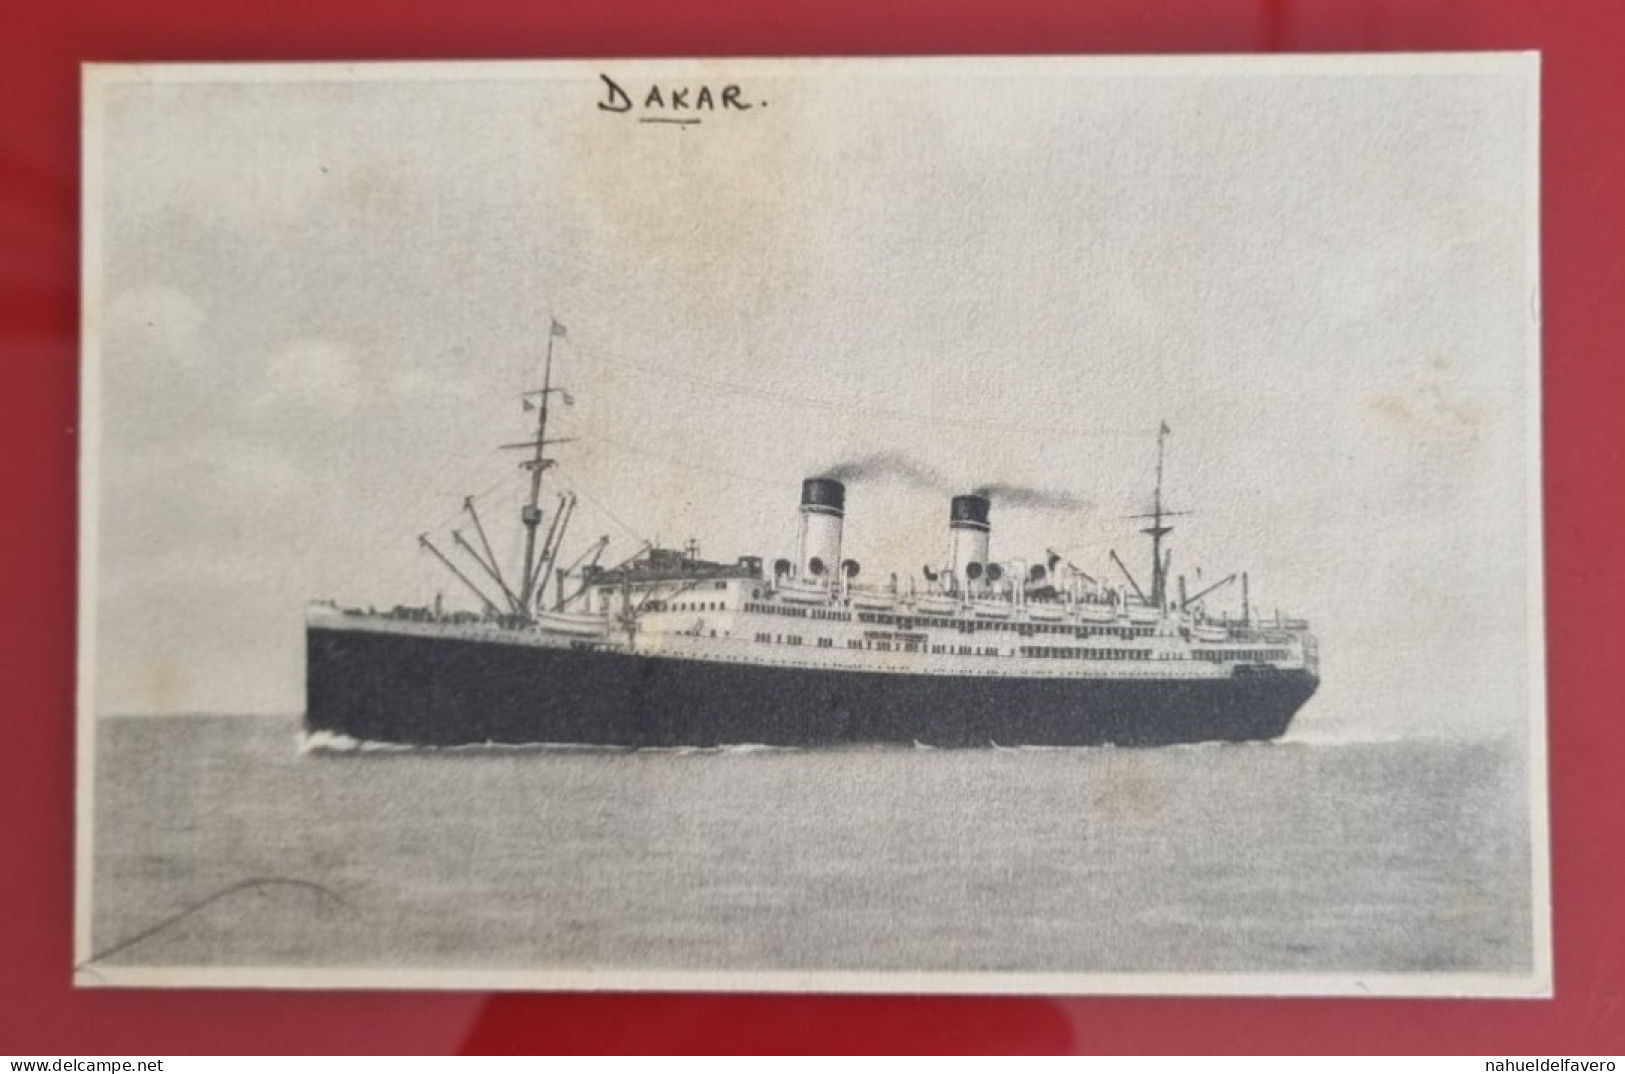 CARTE POSTALE CIRCULÉE À DAKAR, SANS TIMBRE 1934 - P.fo "CONTE BIANCAMANO", Mediterraneo, Sud America Express - Hausboote